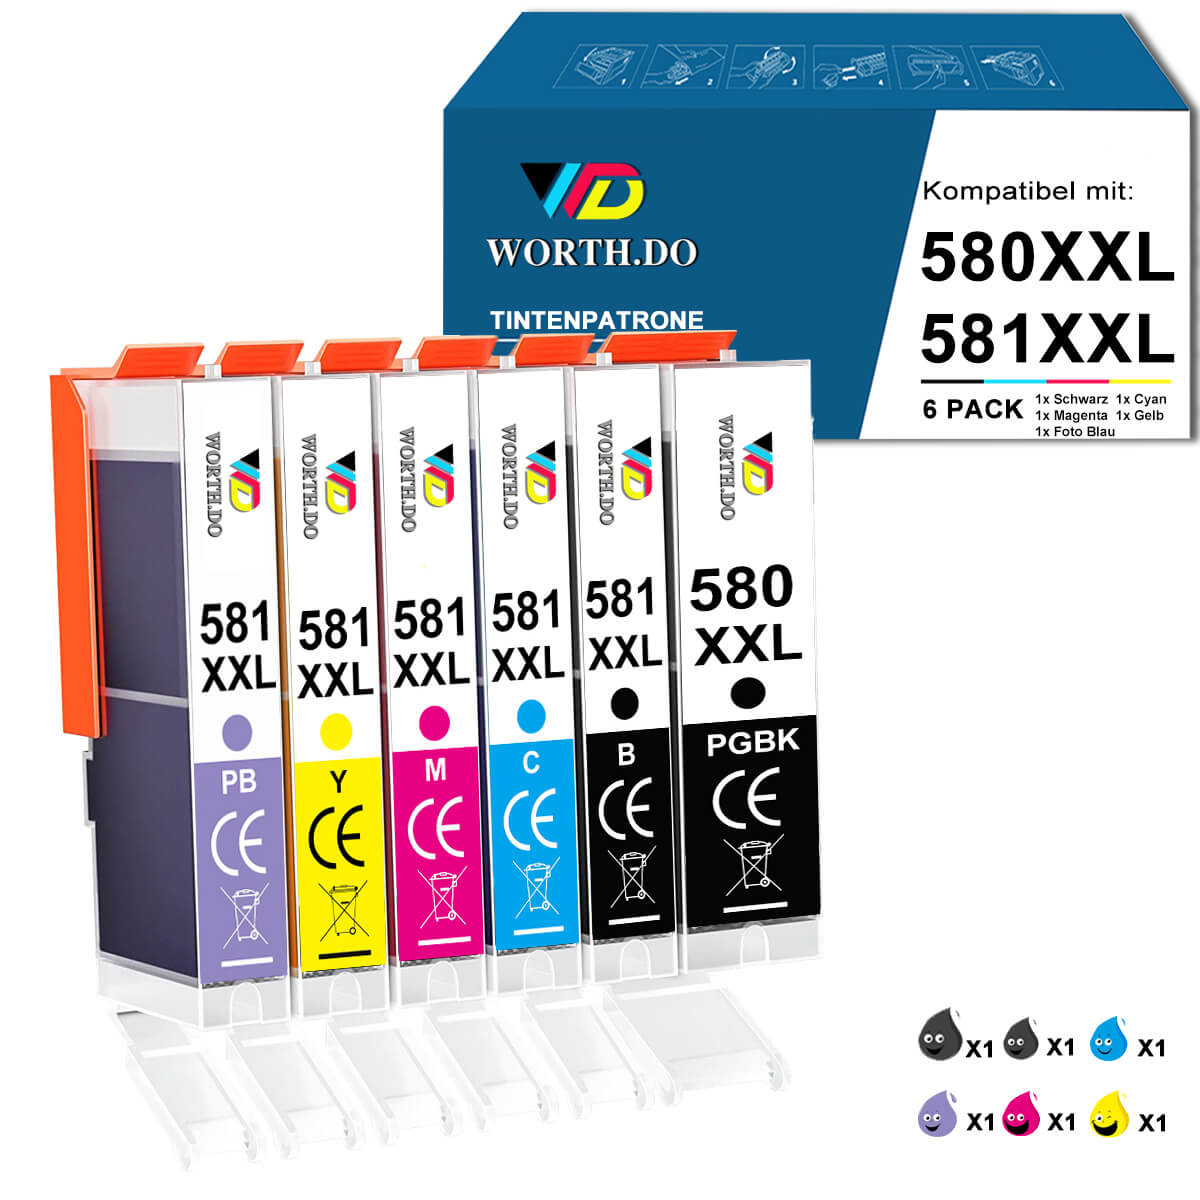       kompatible-tintenpatronen-fuer-canon-pgi-580xl-cli-581xl-colorpack-worthdo